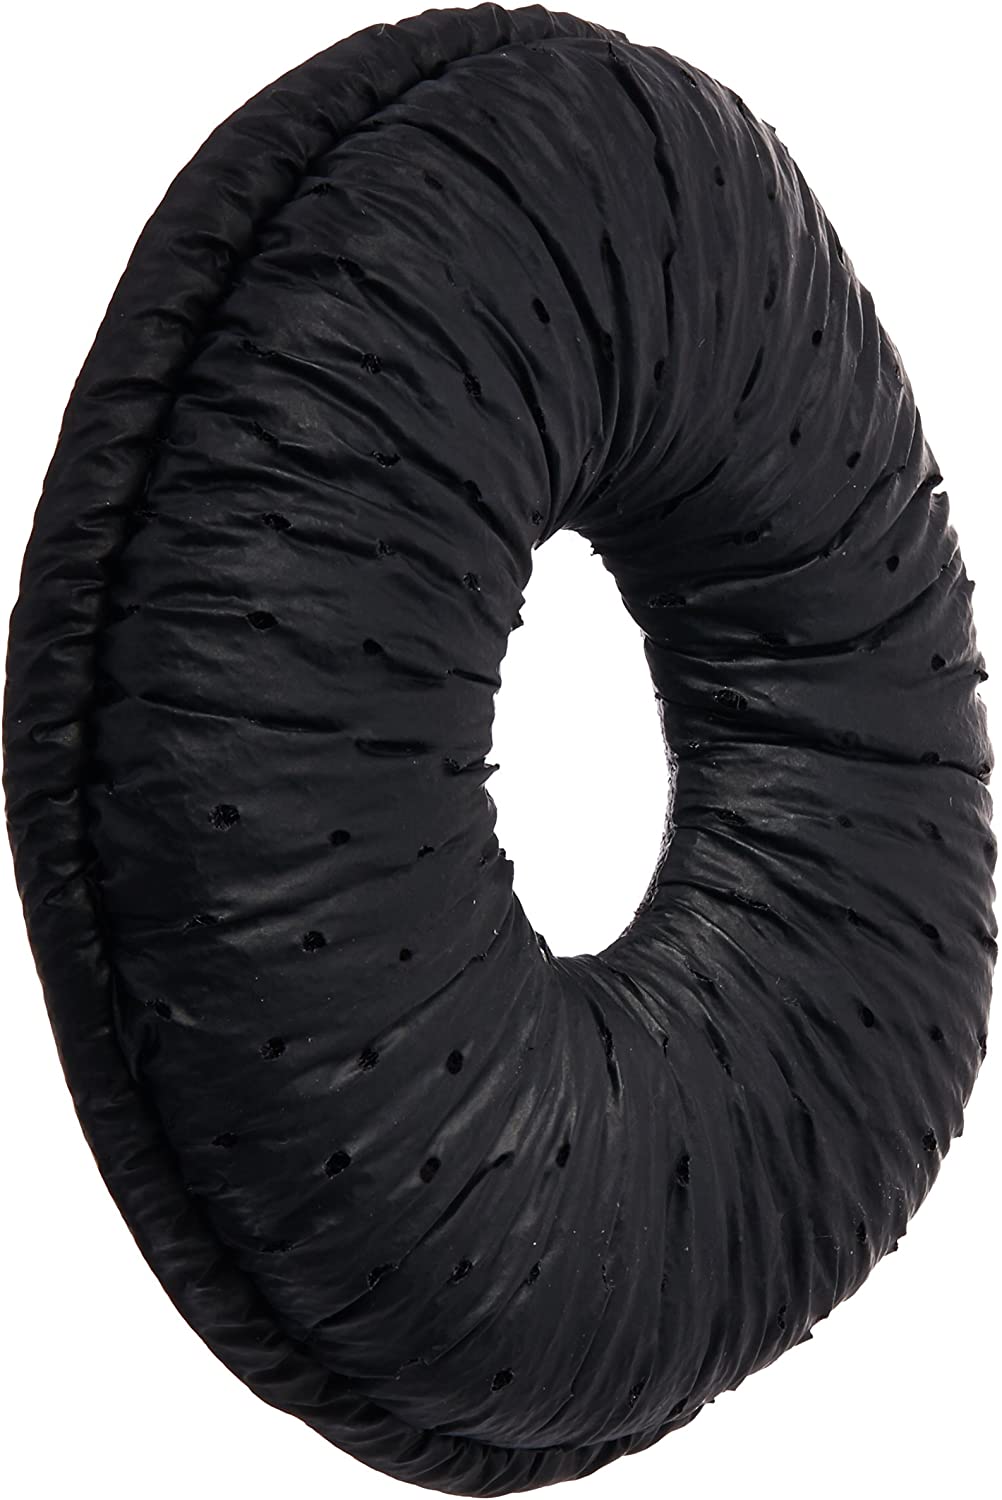 Plantronics Leather Ear Cushion, Black